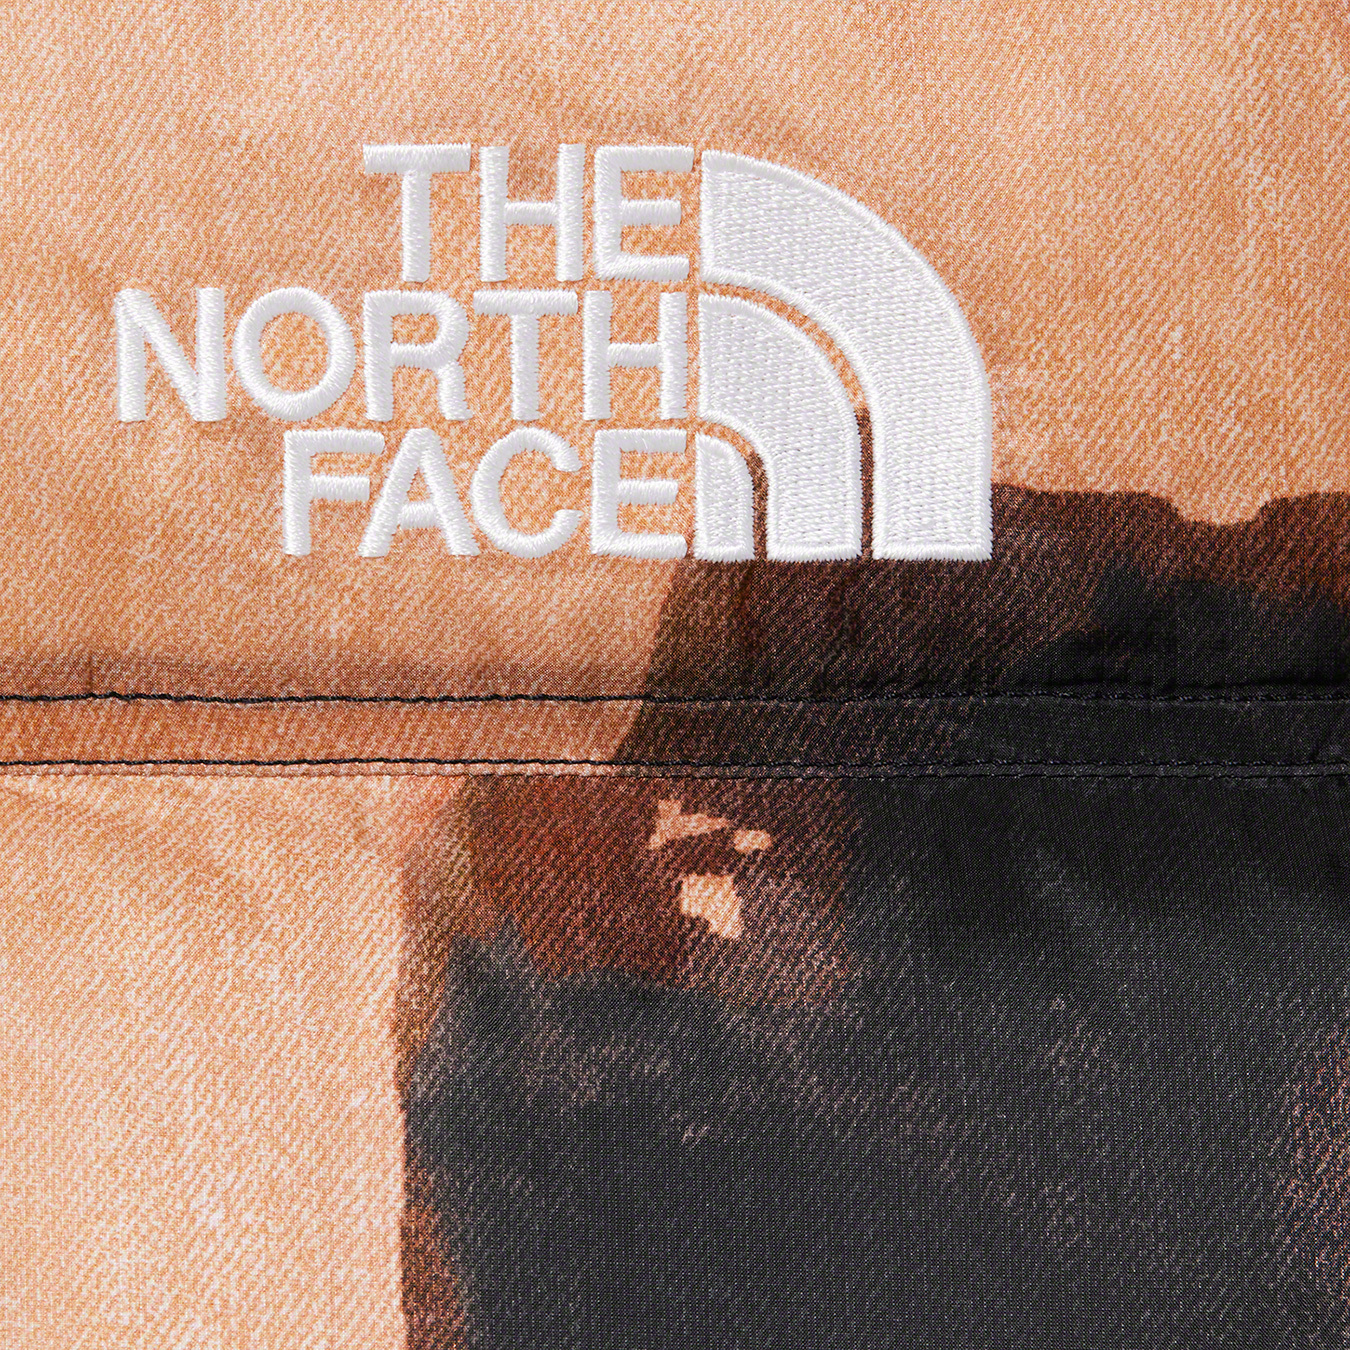 Supreme The North Face Bleached Denim Print Nuptse Jacket Indigo